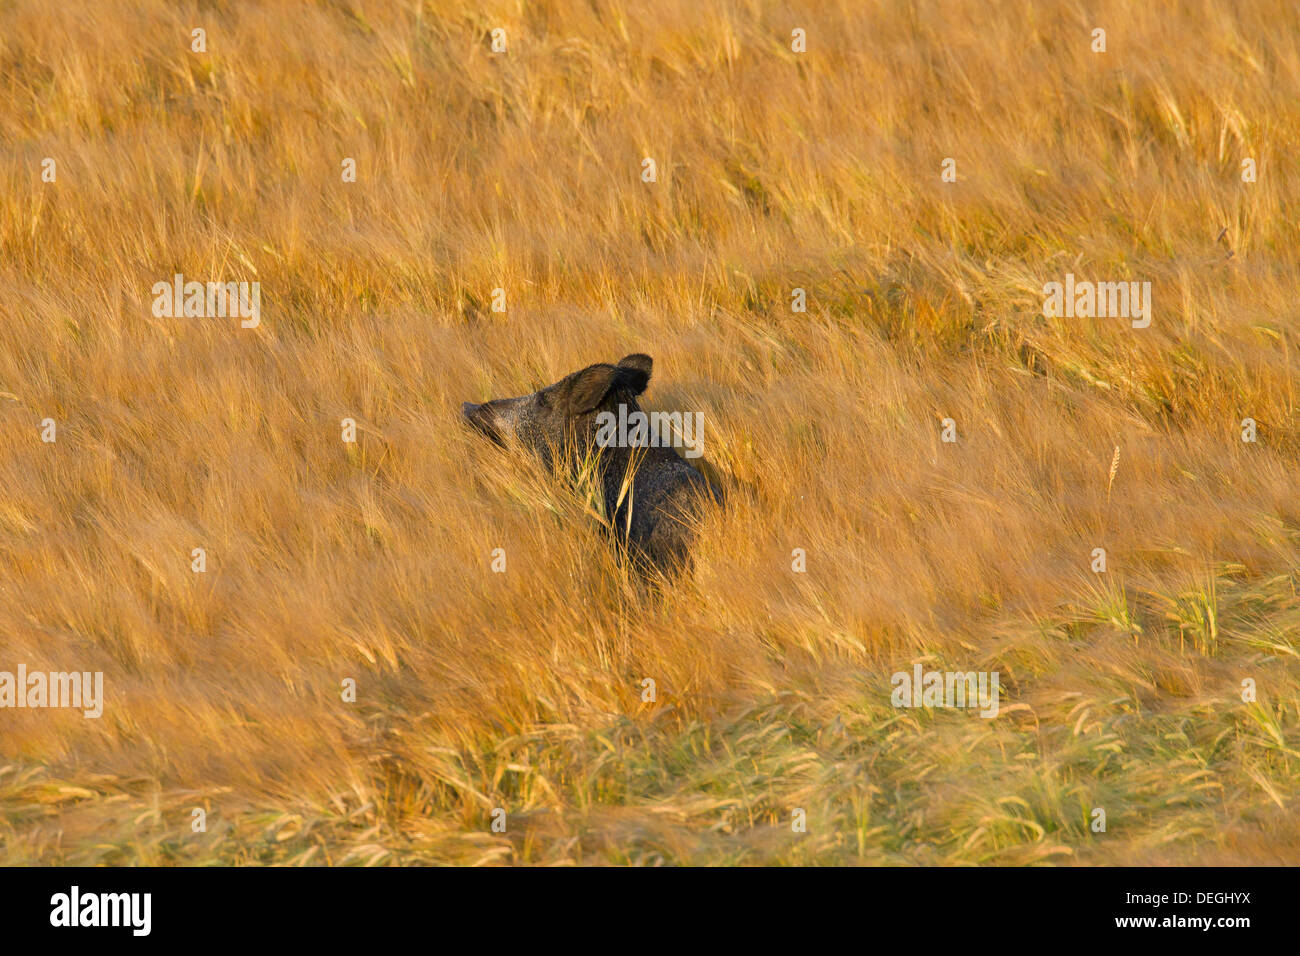 Nuisance by wild boar (Sus scrofa) trampling crop by foraging in cornfield on farmland Stock Photo